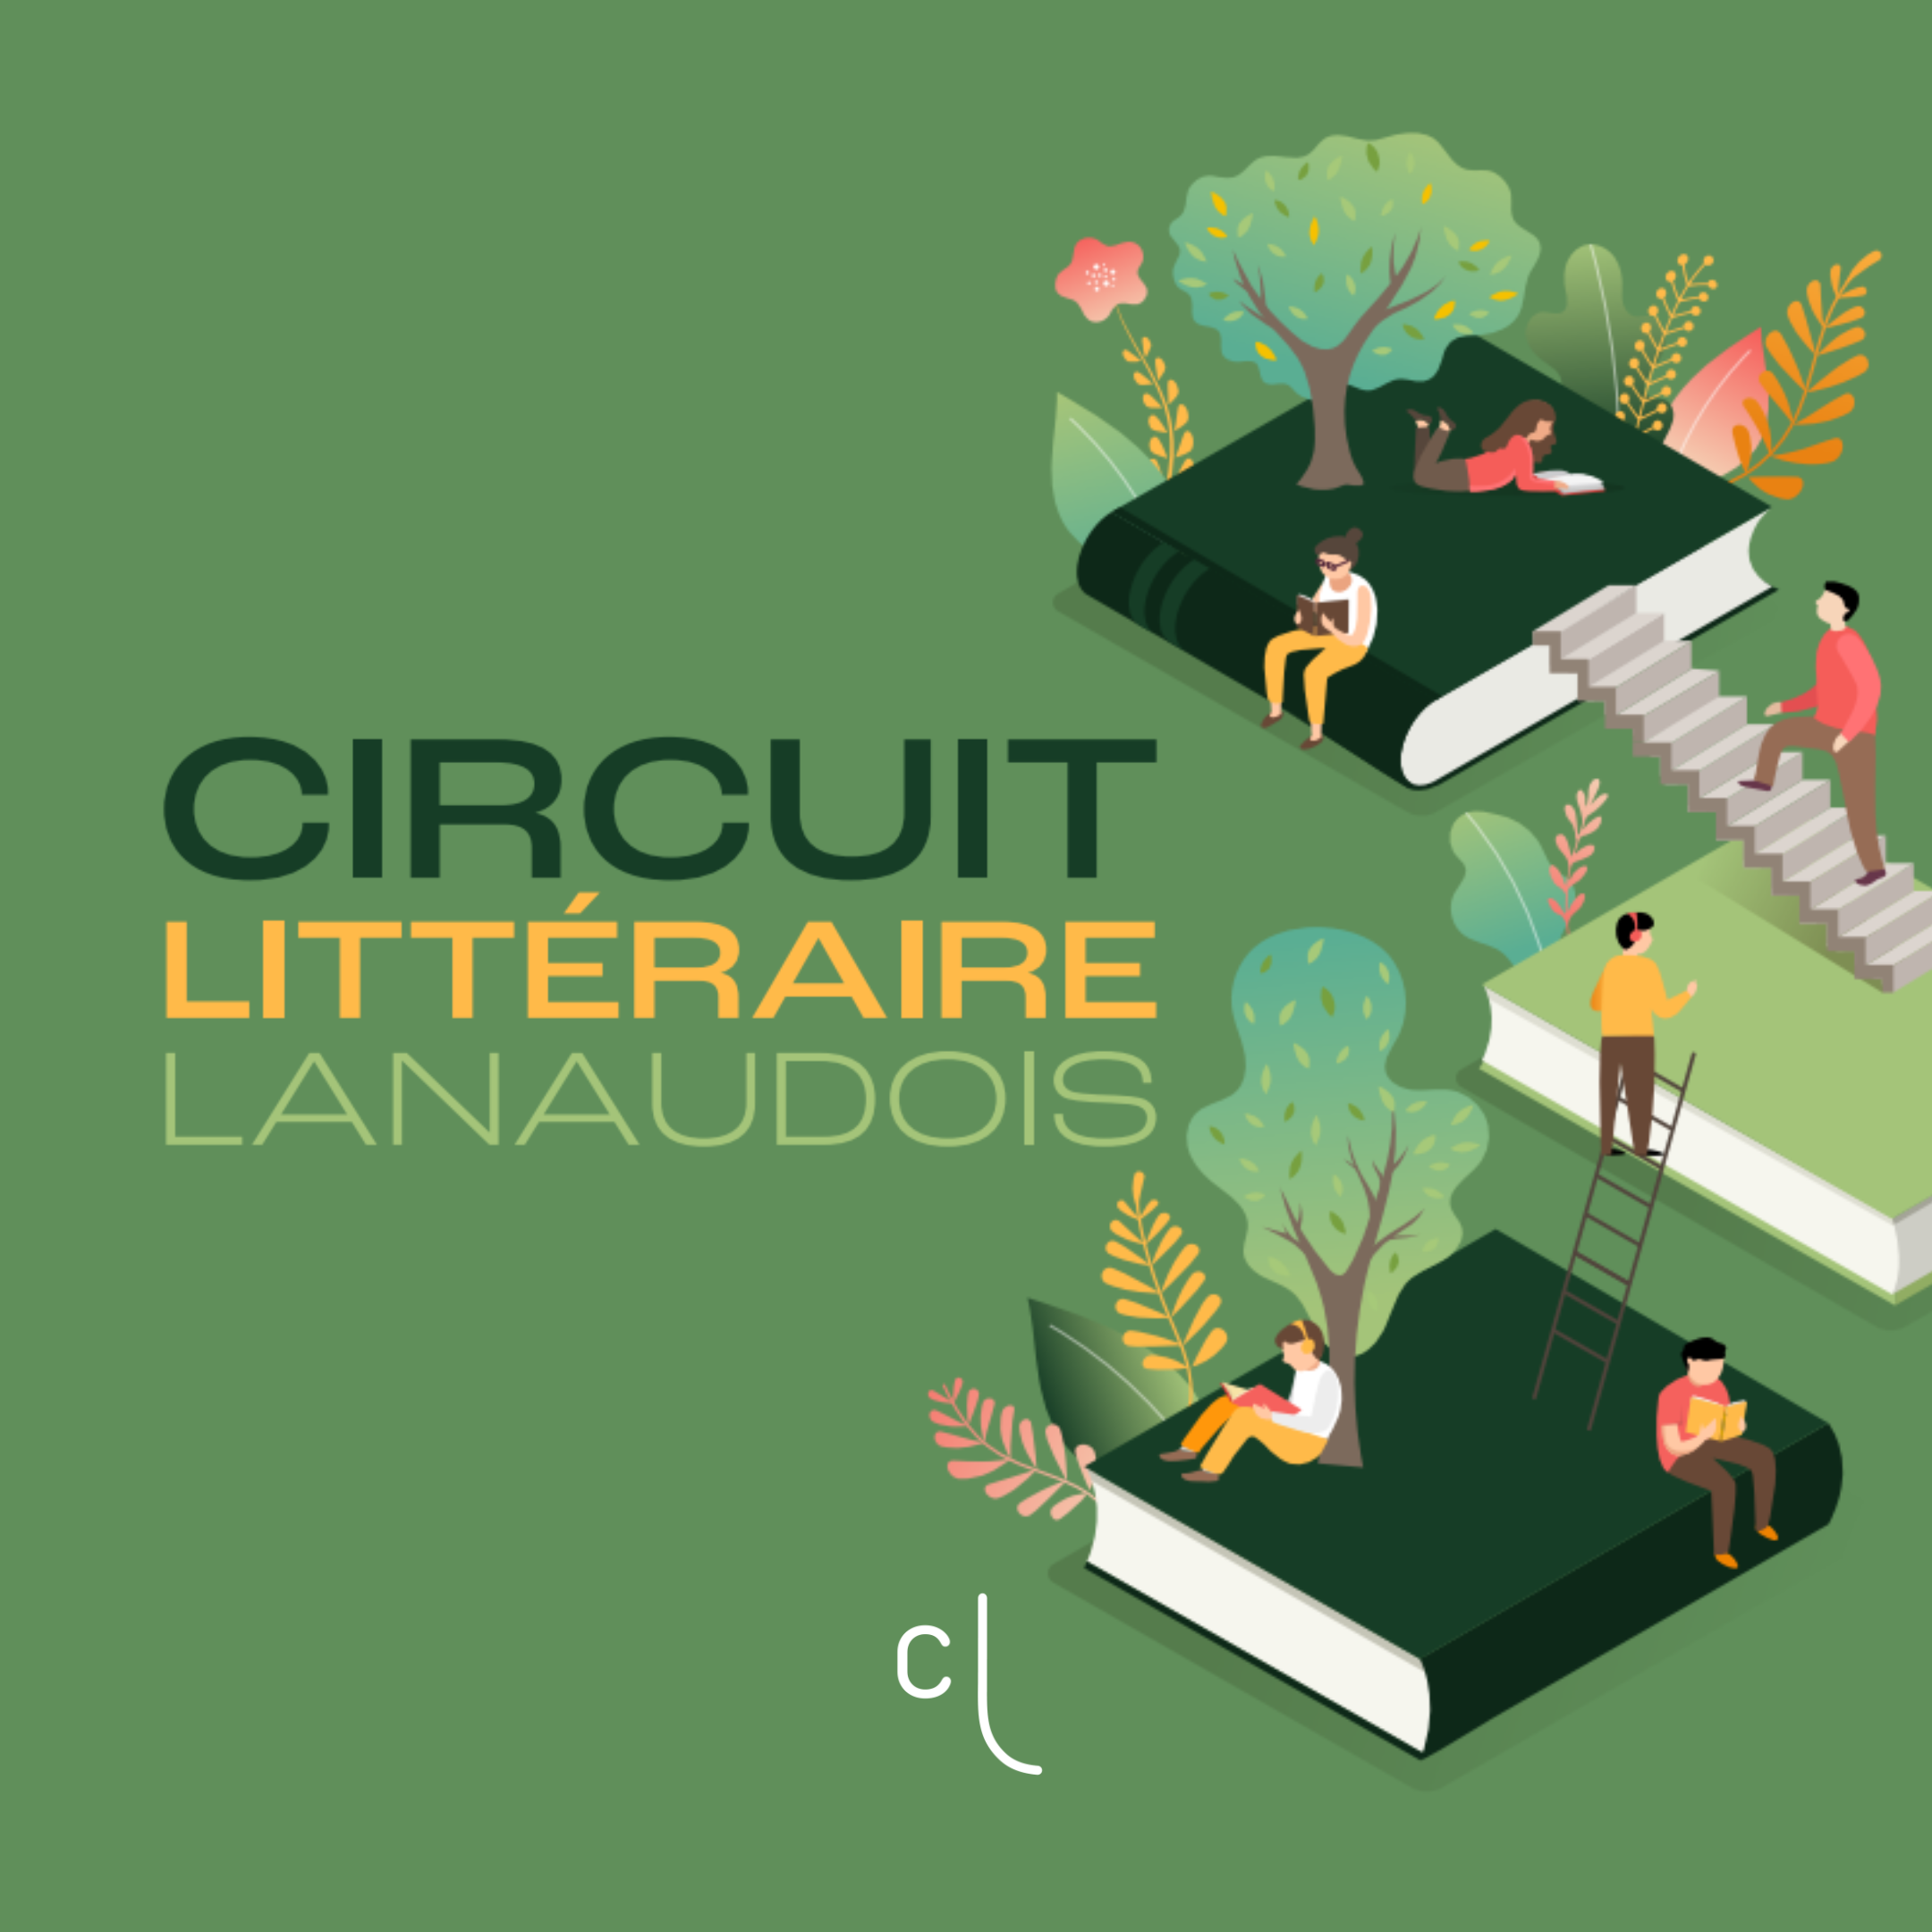 Circuit littéraire lanaudois